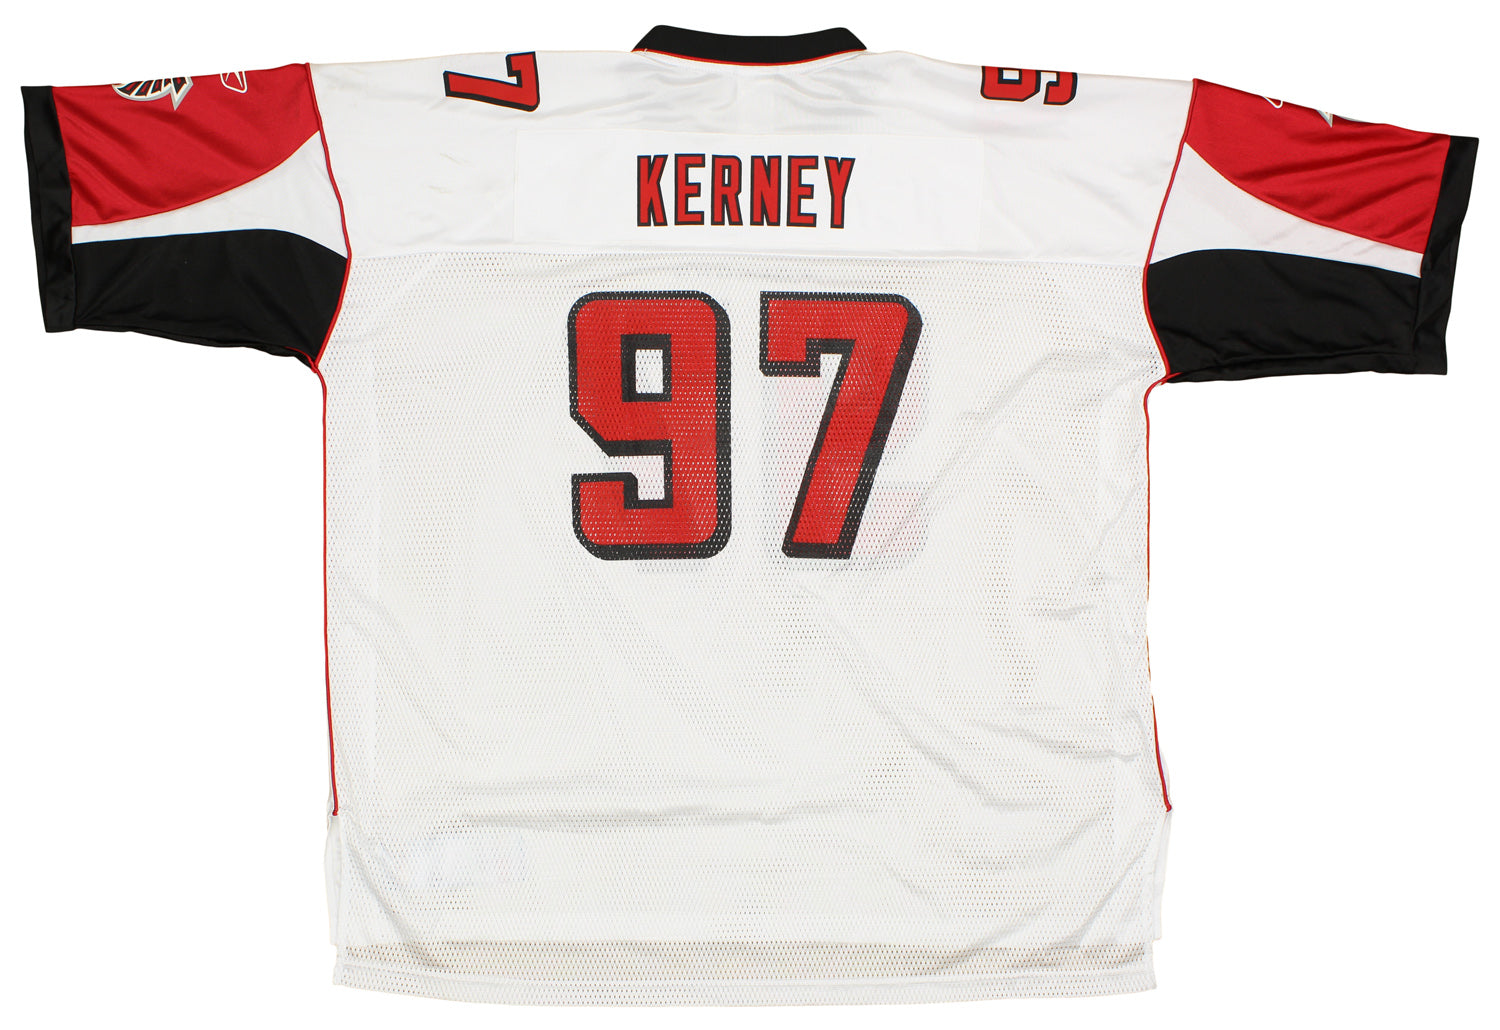 Reebok NFL Men's Atlanta Falcons Patrick Kerney #97 Replica Jersey, White